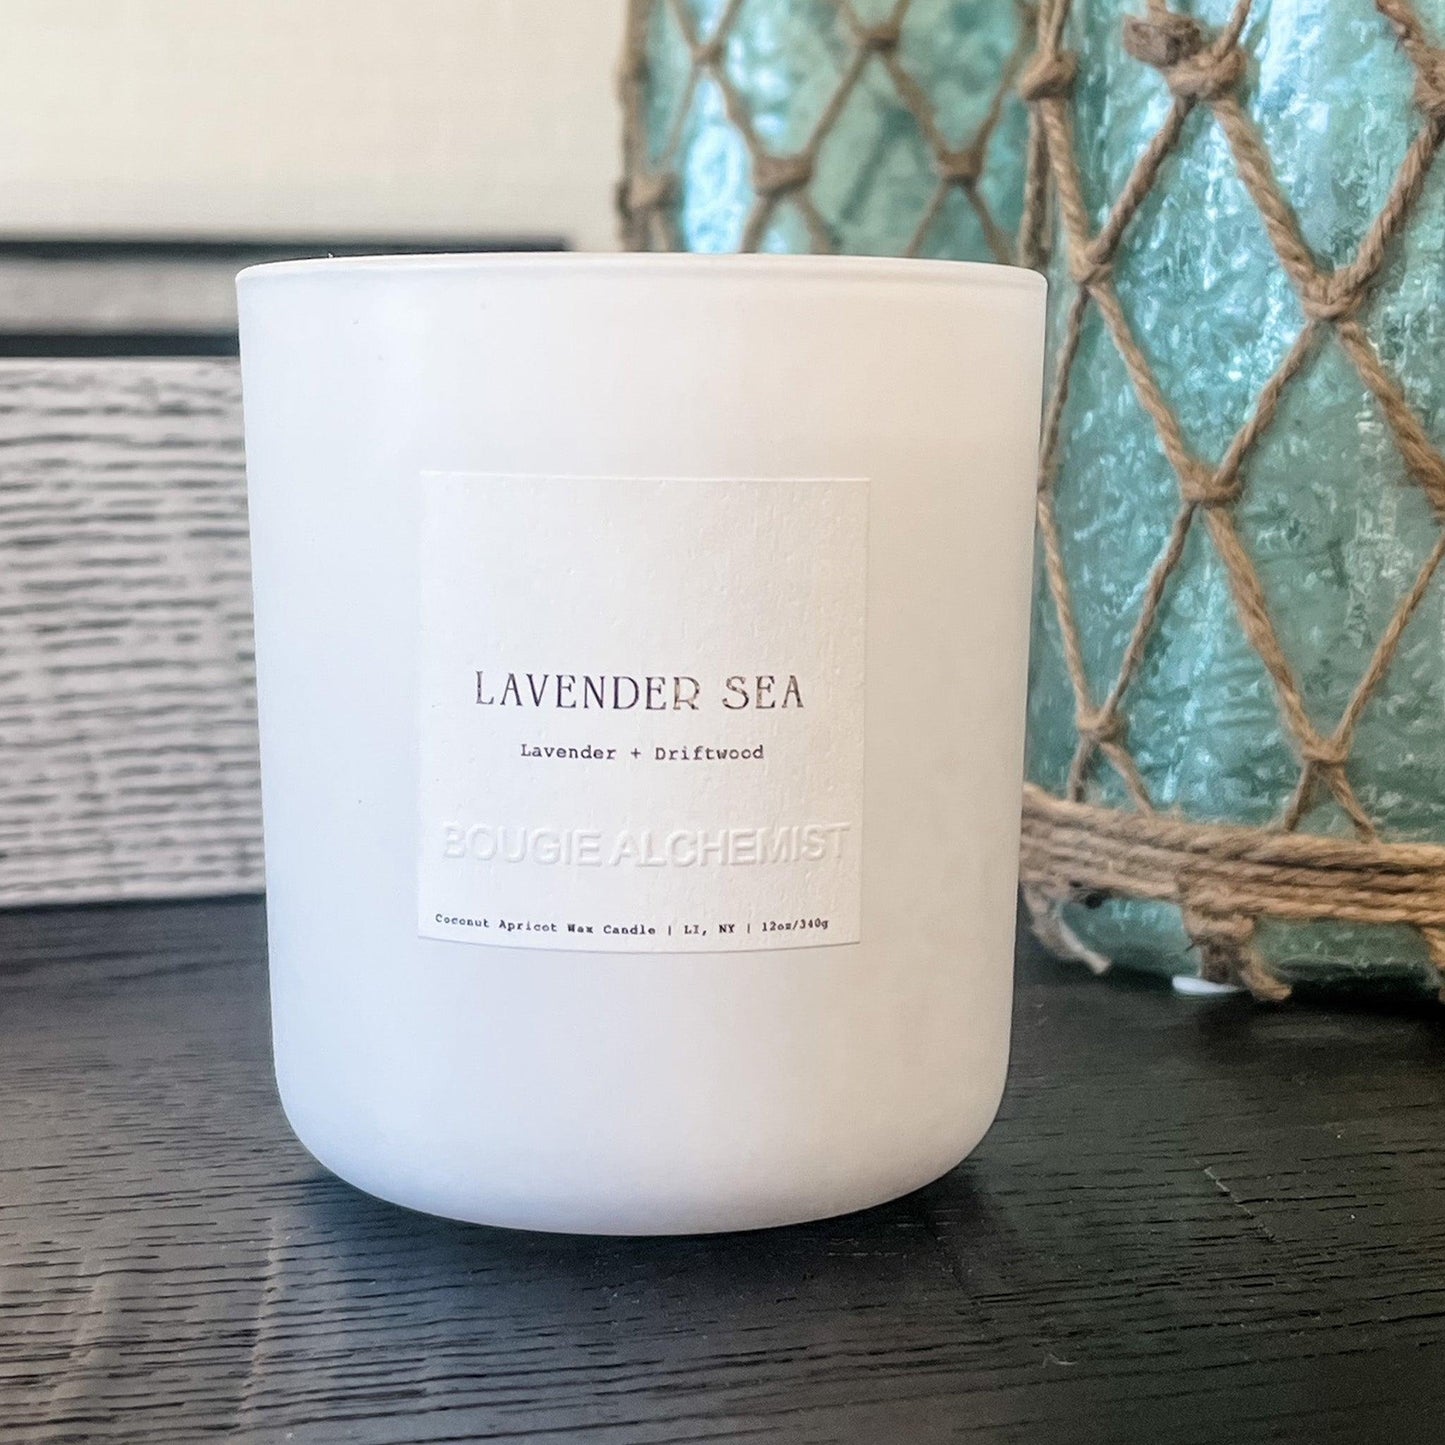 Lavender Sea - Bougie Alchemist